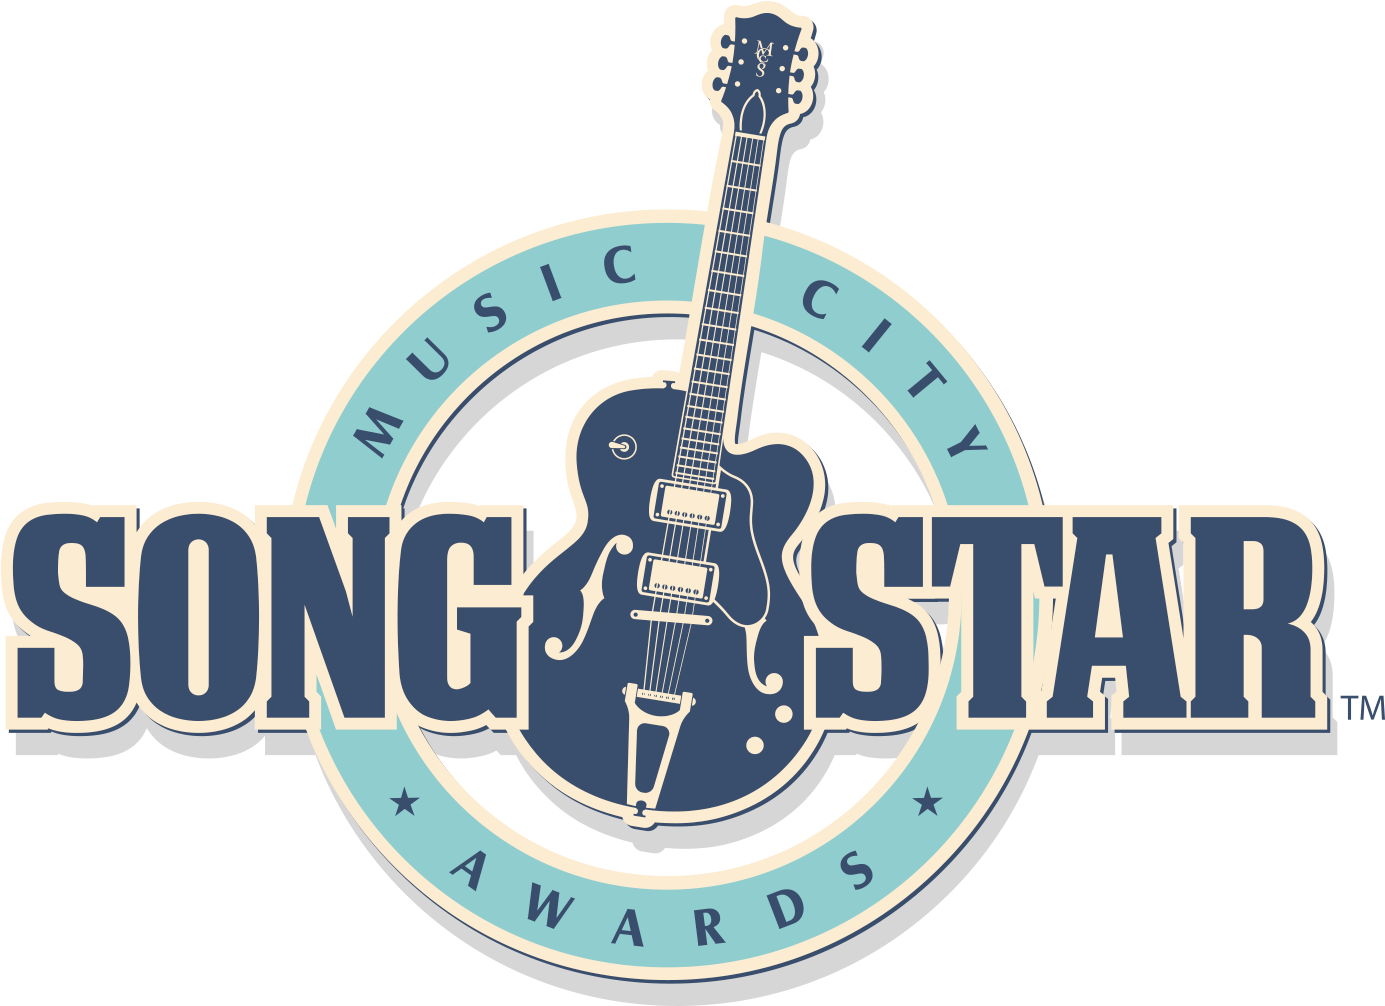 Music City Song Star Awards Logo PNG